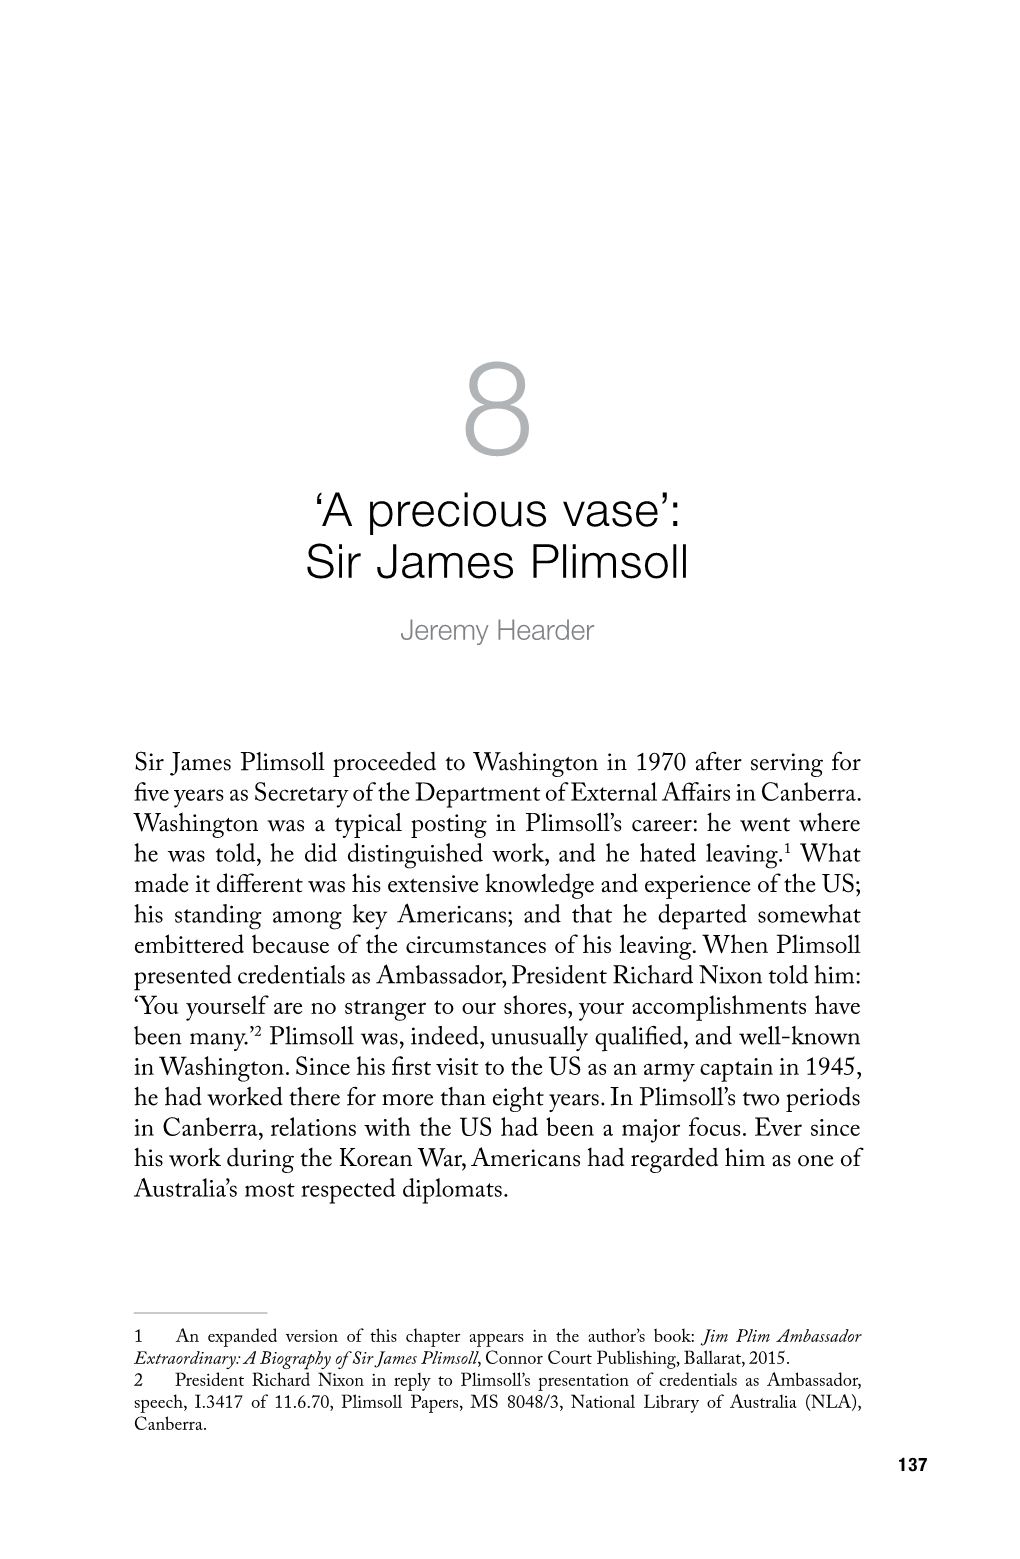 'A Precious Vase': Sir James Plimsoll